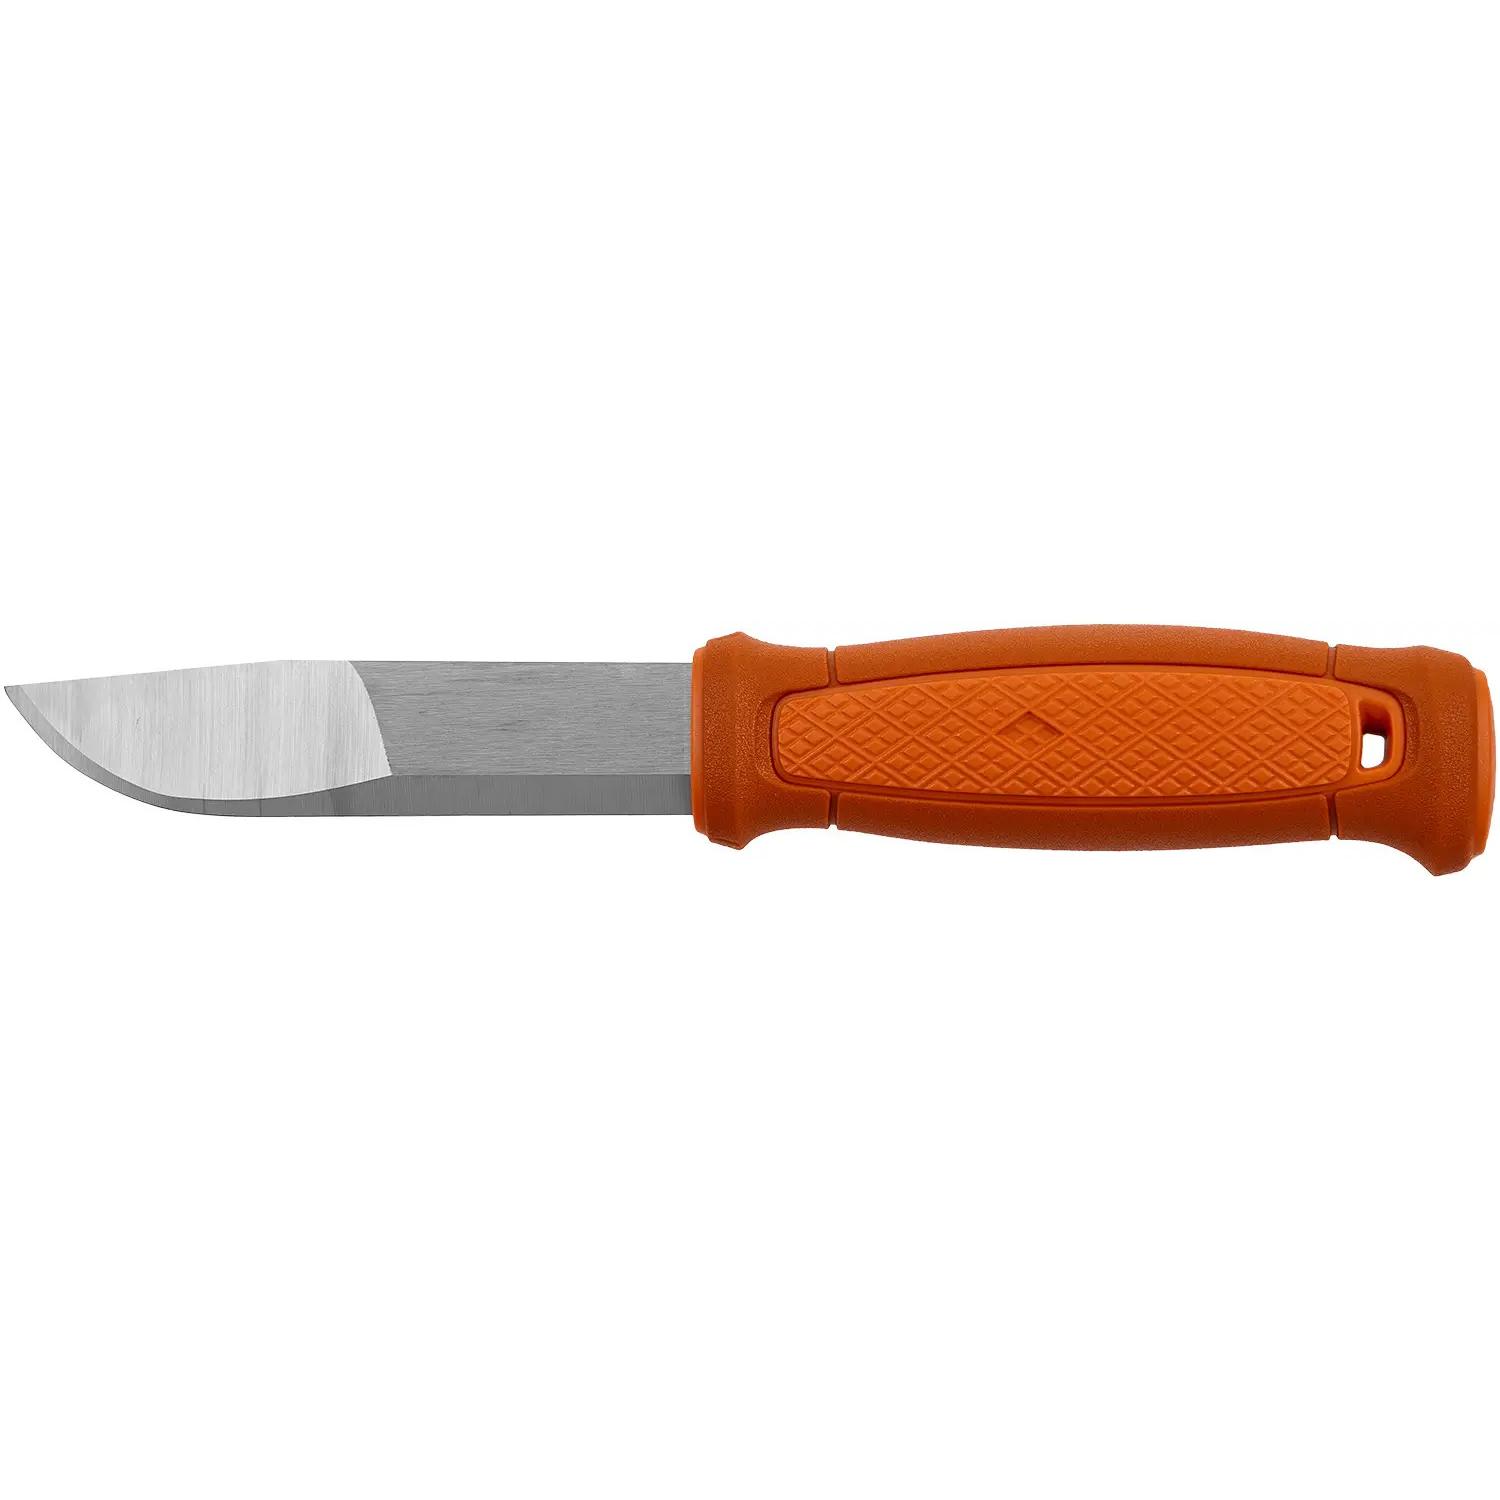 Нож Morakniv Kansbol. Цвет - оранжевый 13505 2305.02.02